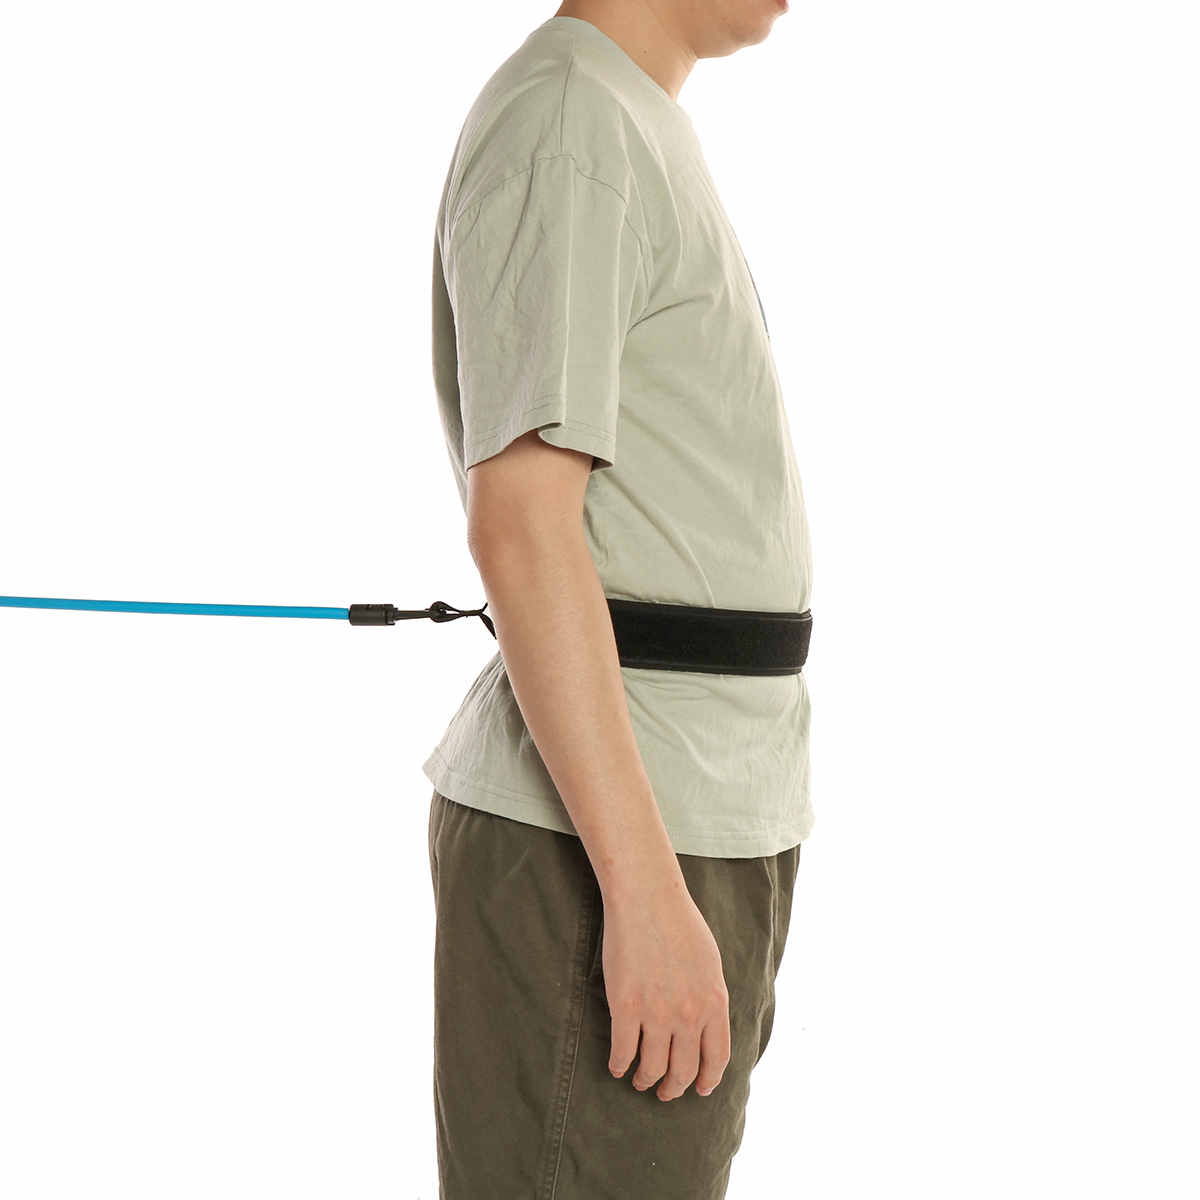 Swim-Water-Training-Rope-Strength-Belt-Harness-Resistance-Leash-Kit-Exerciser-For-Adults-Children-1709294-4